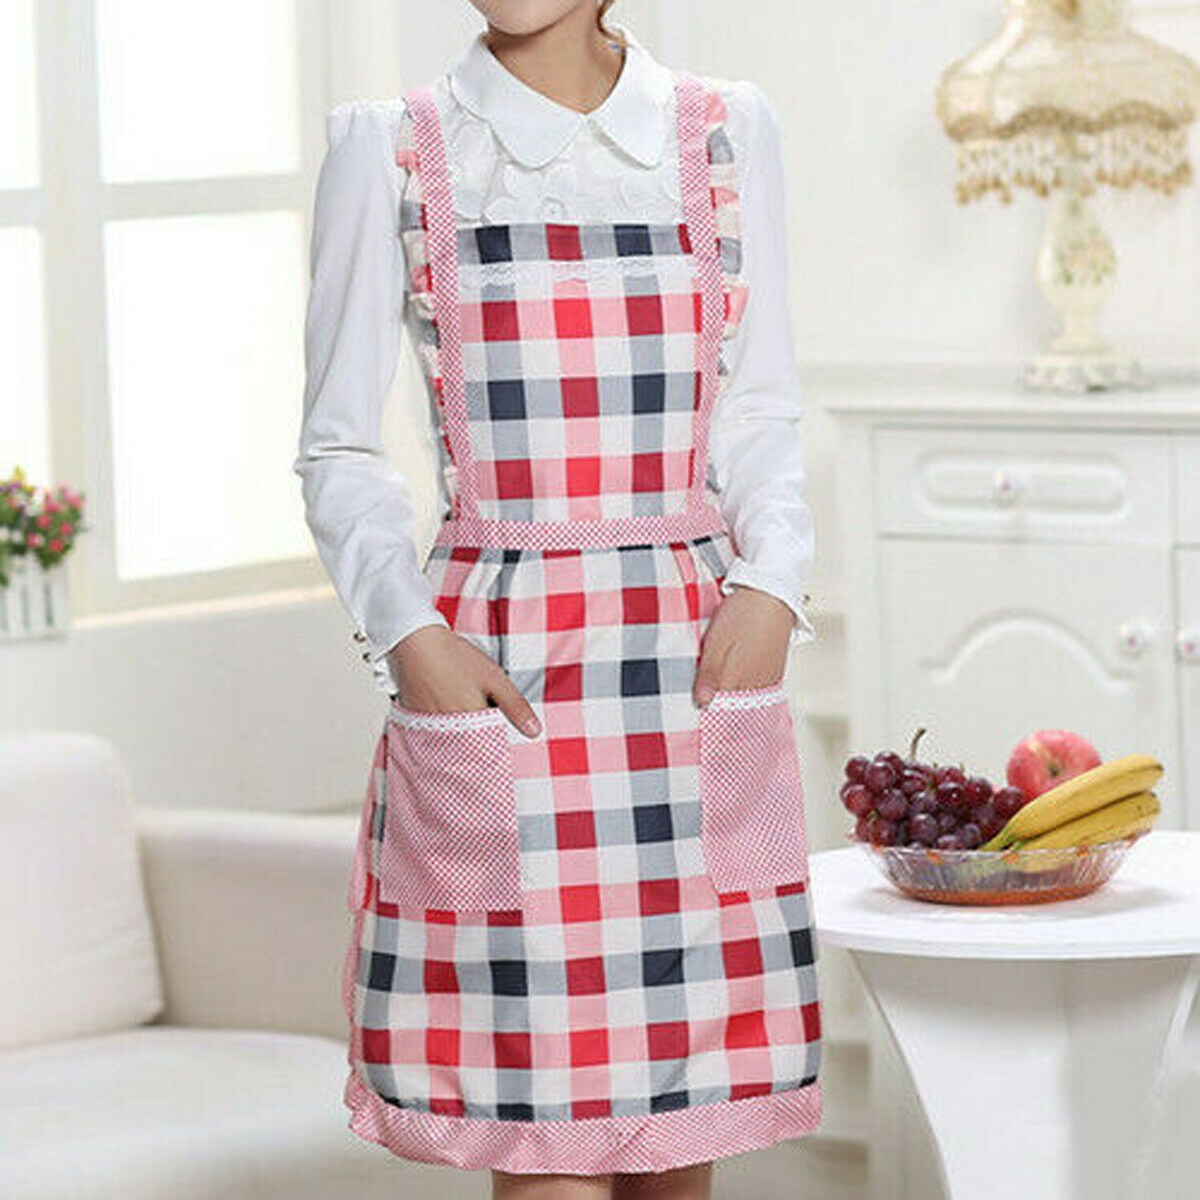 Women Men Cooking Kitchen Restaurant Chef Adjustable Bib Apron Dress w/ Pocket.c 